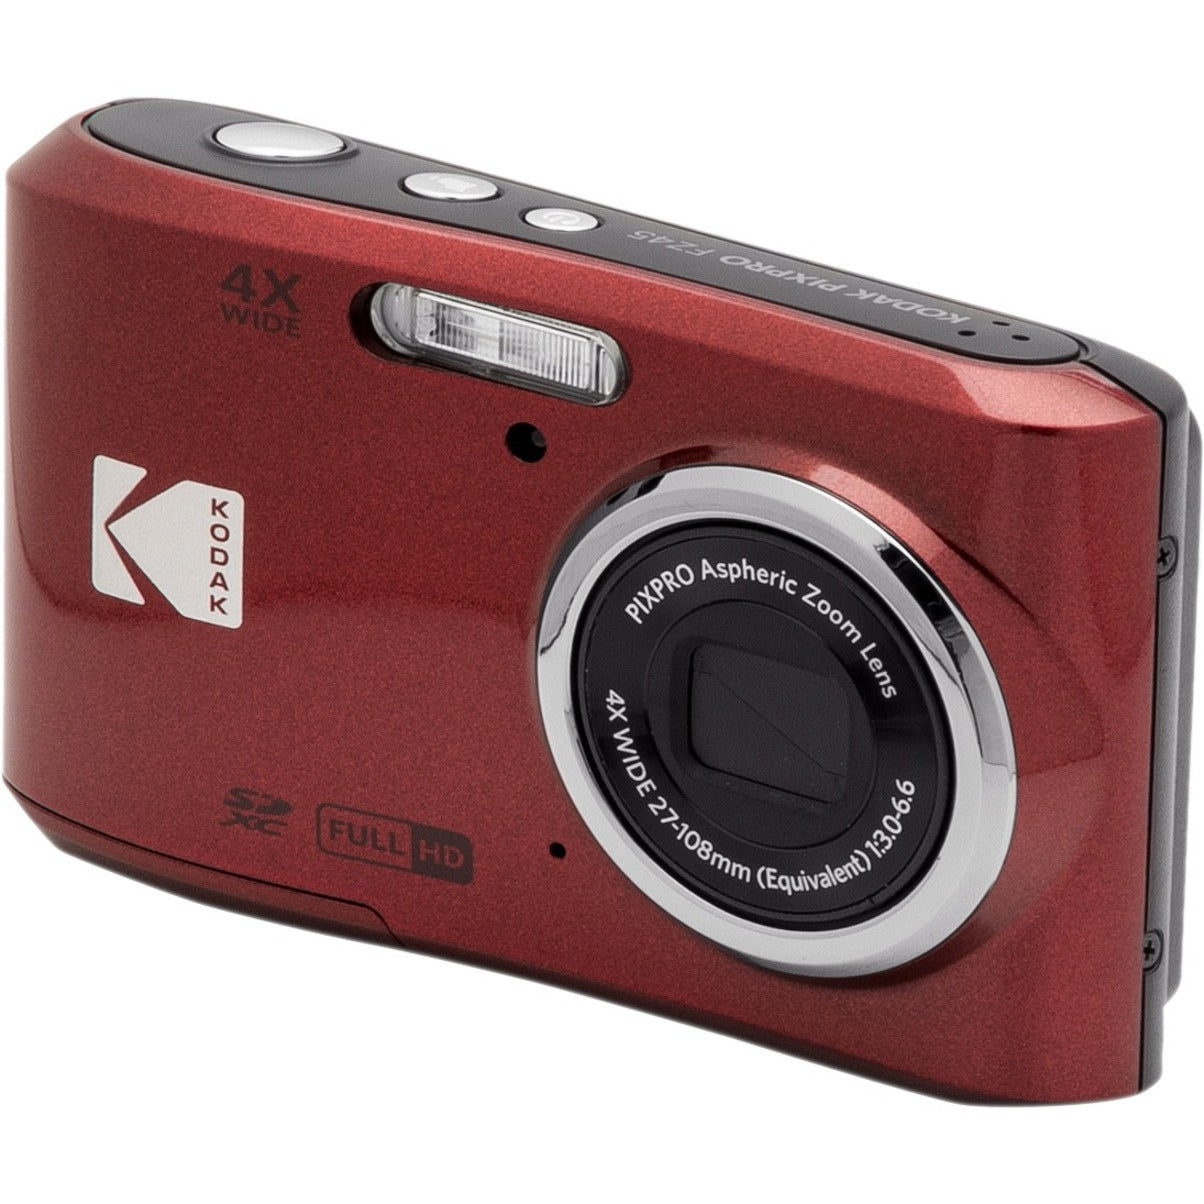 Kodak FZ45-RD PIXPRO Compact Camera, 16.4 Megapixel, 4x Optical Zoom, Full HD Video, 2.7 LCD Screen